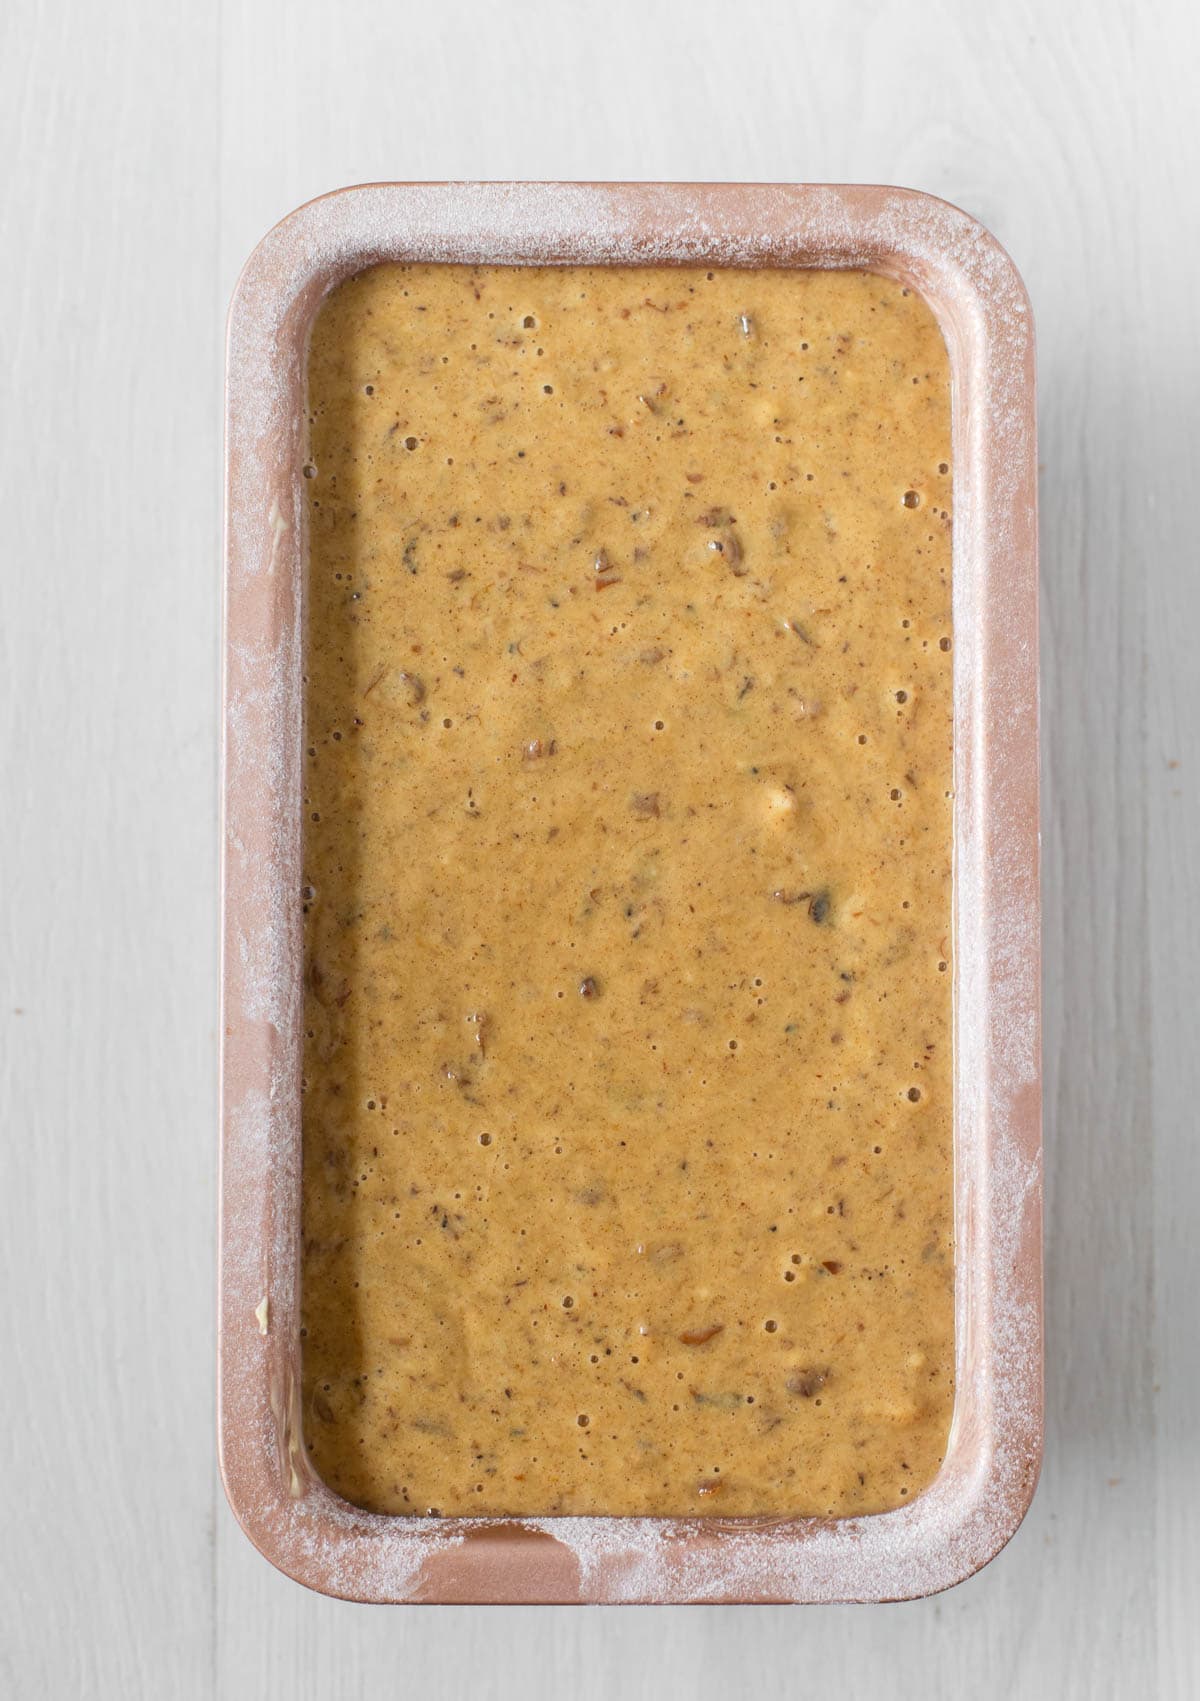 Date loaf batter in greased loaf tin before baking.